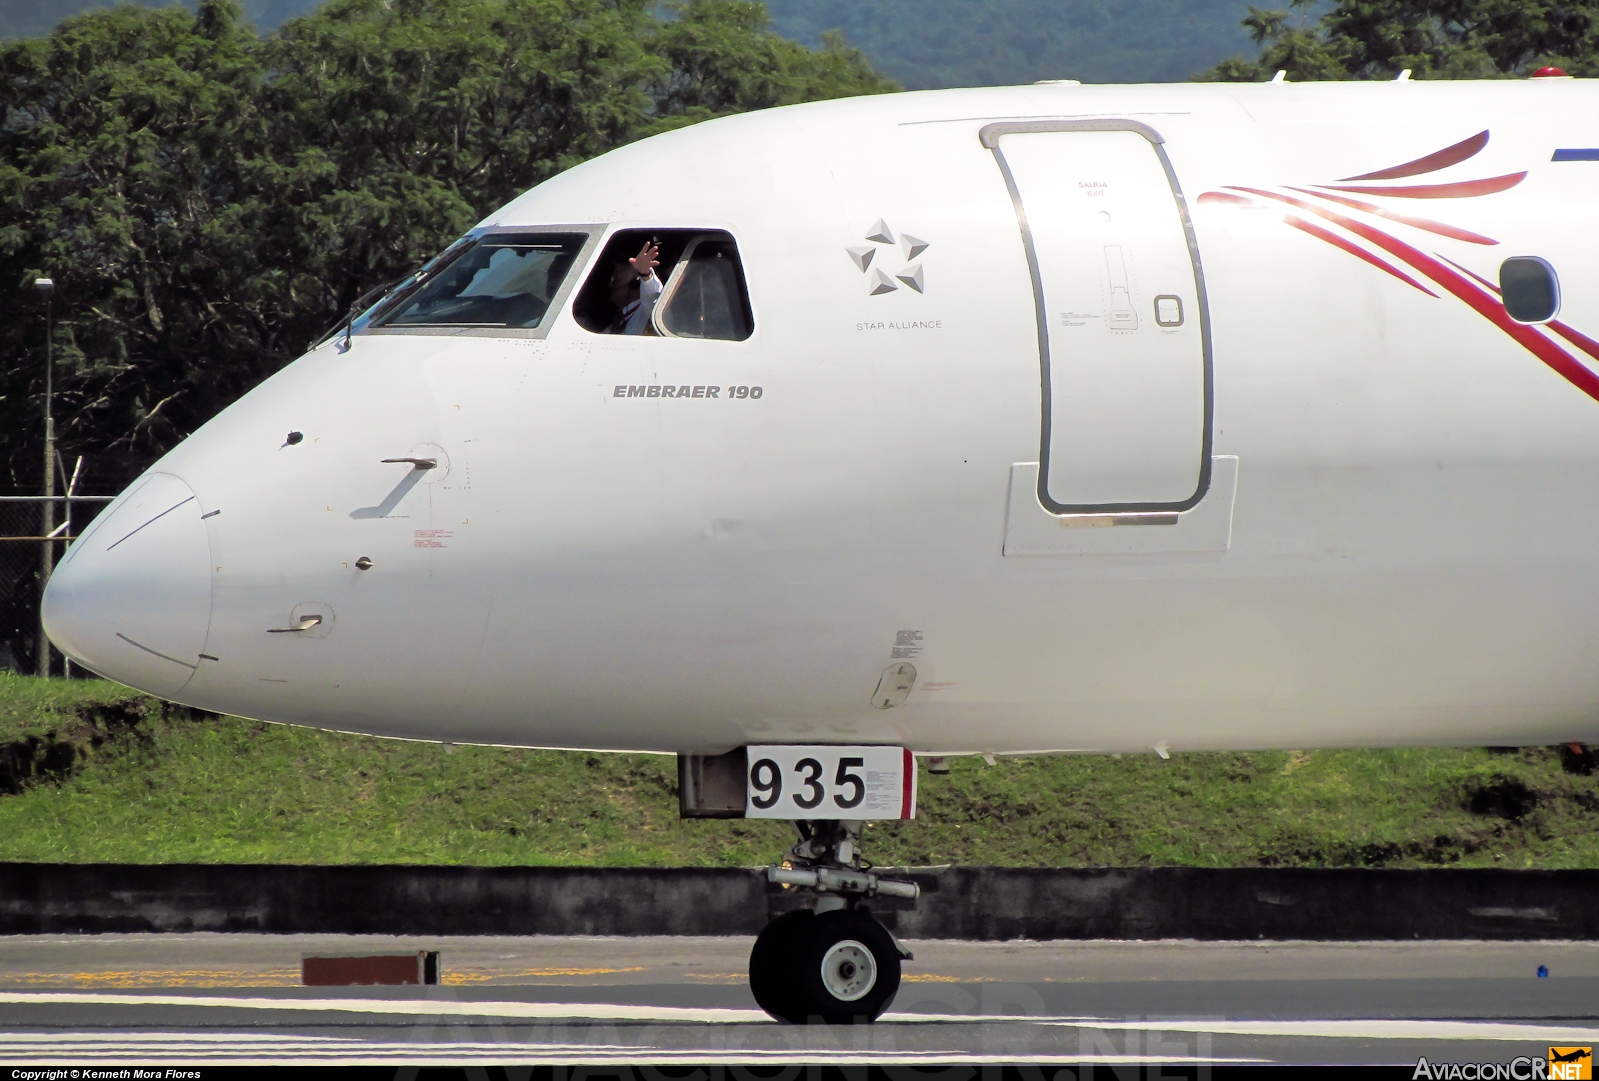 N935TA - Embraer 190-100IGW - TACA